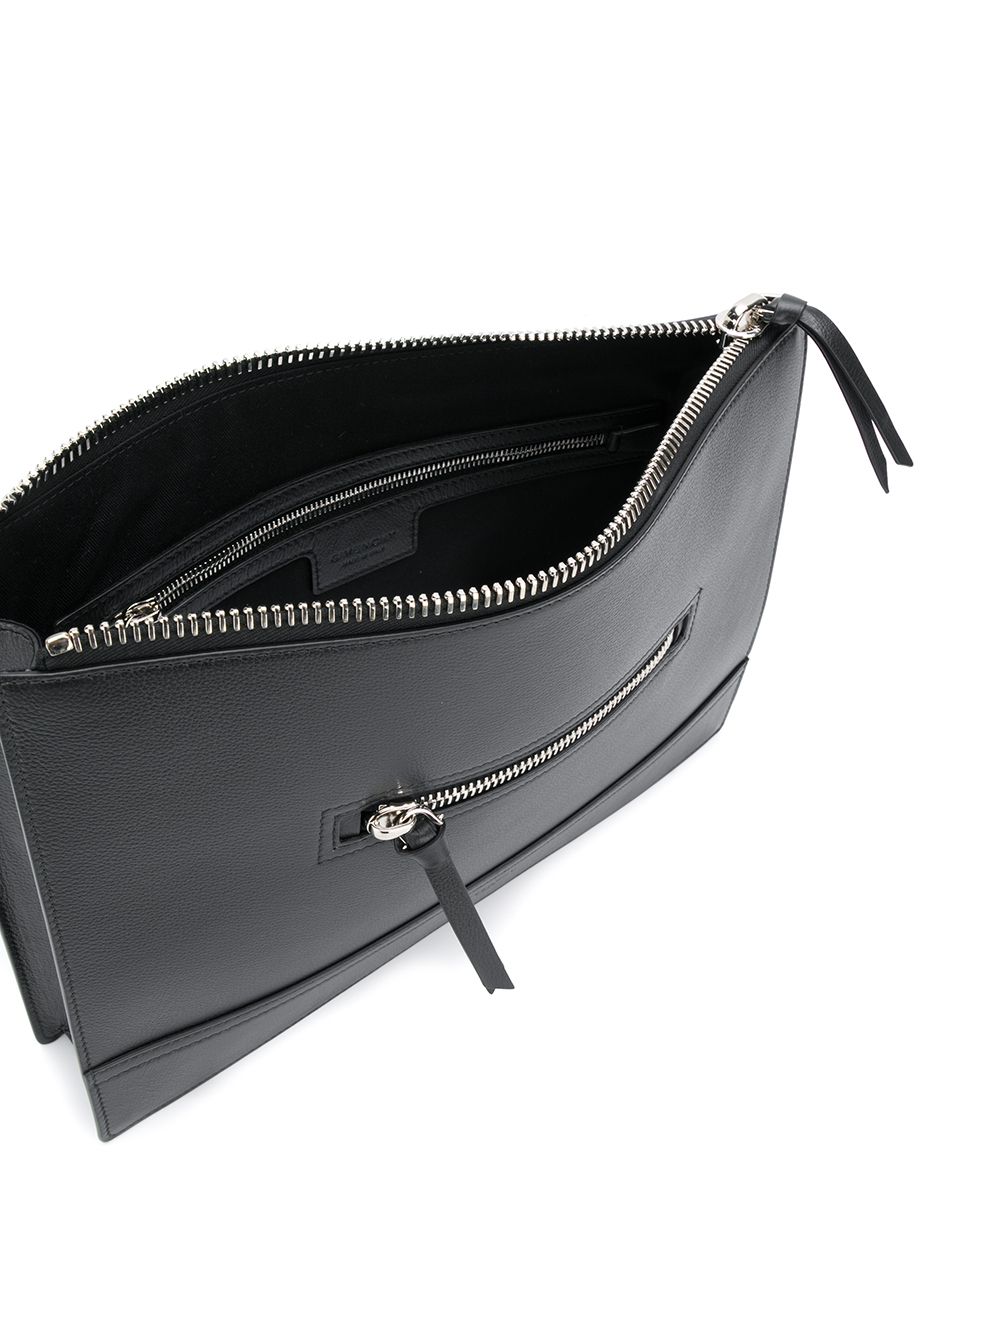 фото Givenchy сумка-почтальонка